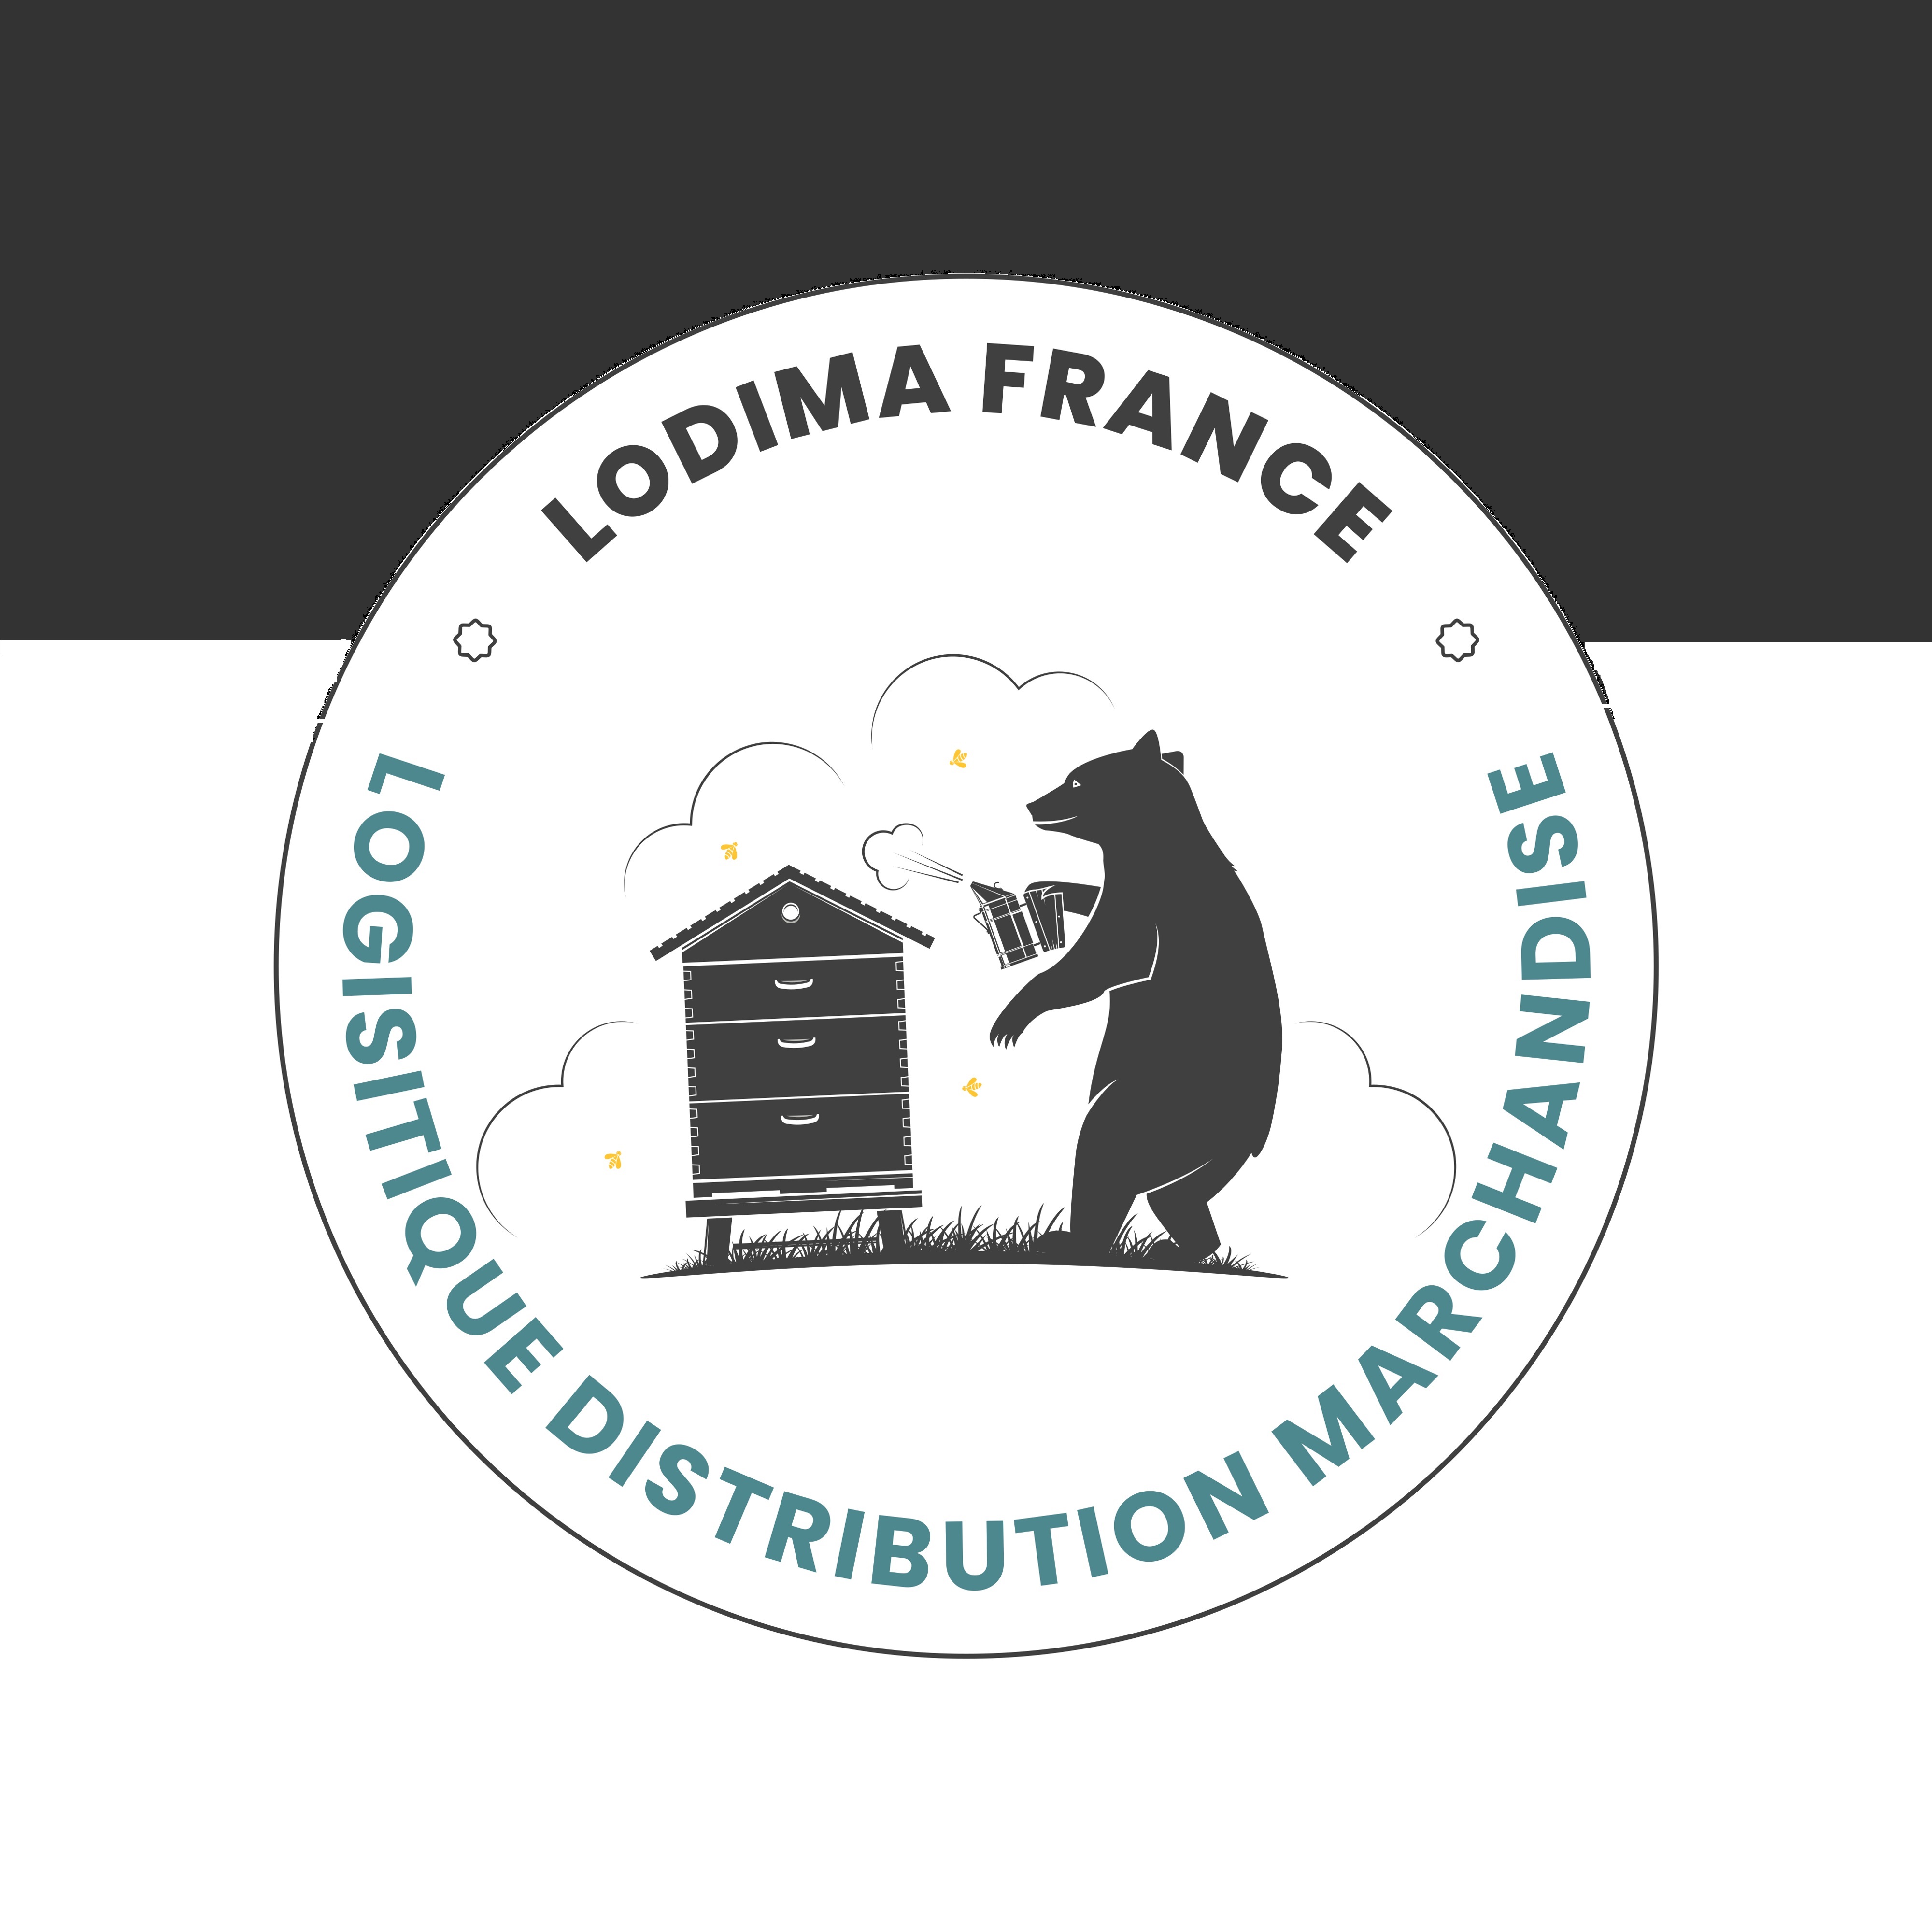 Lodima-France